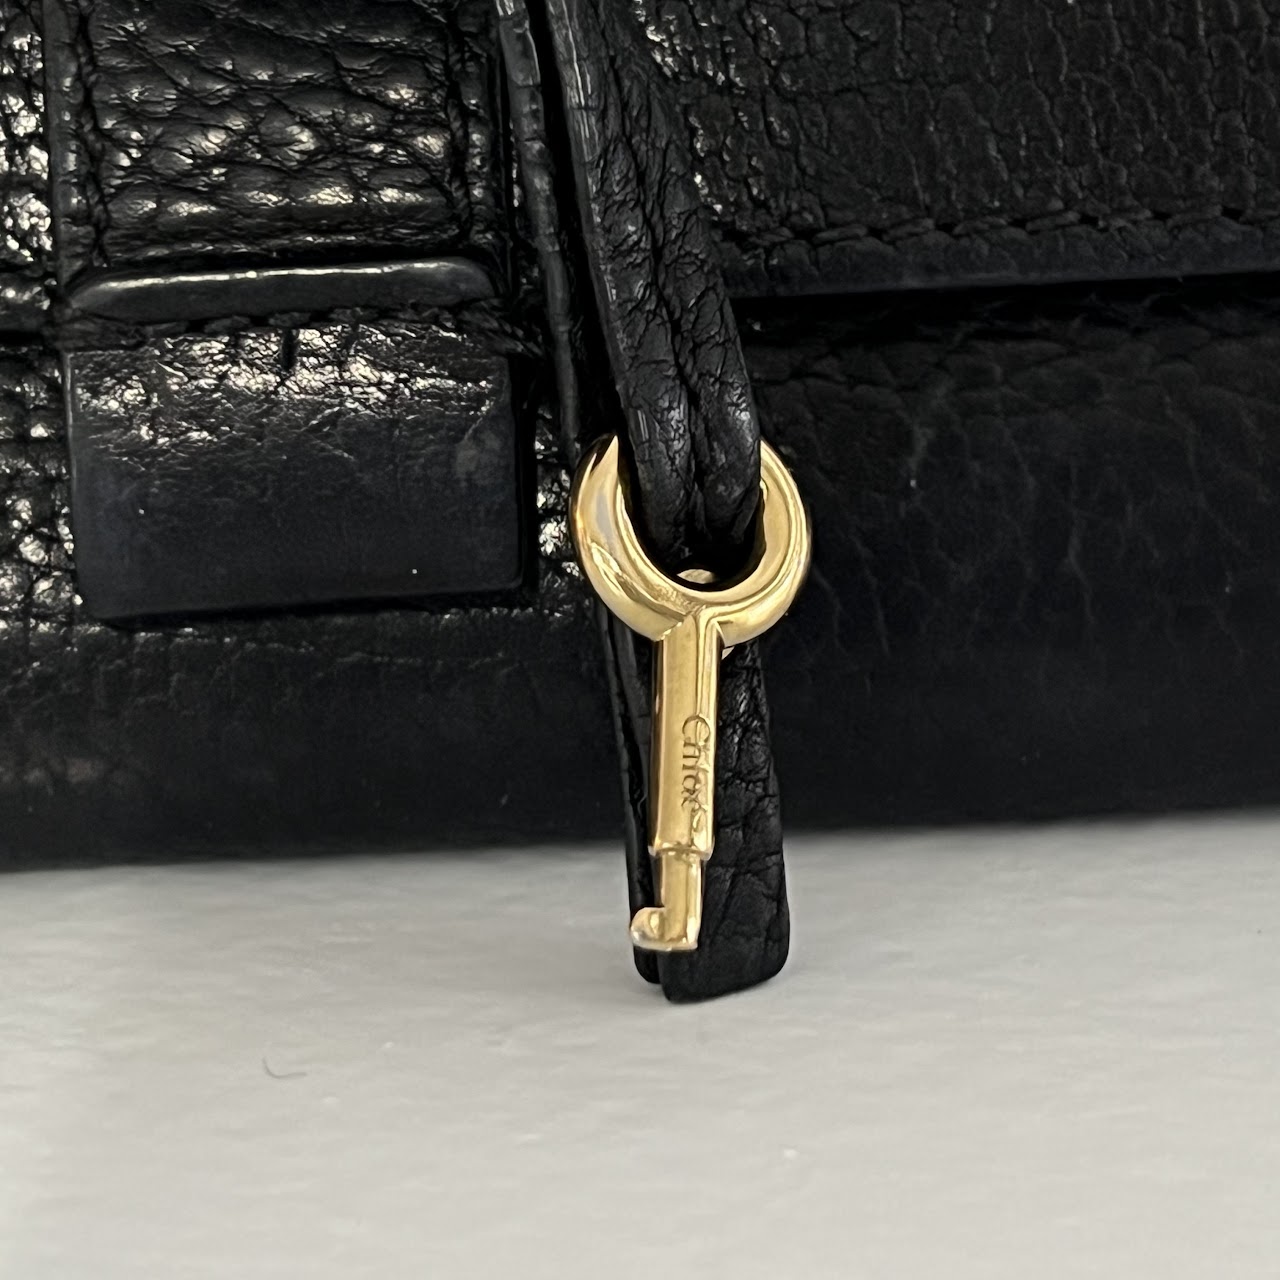 Chloé Black Leather Wallet